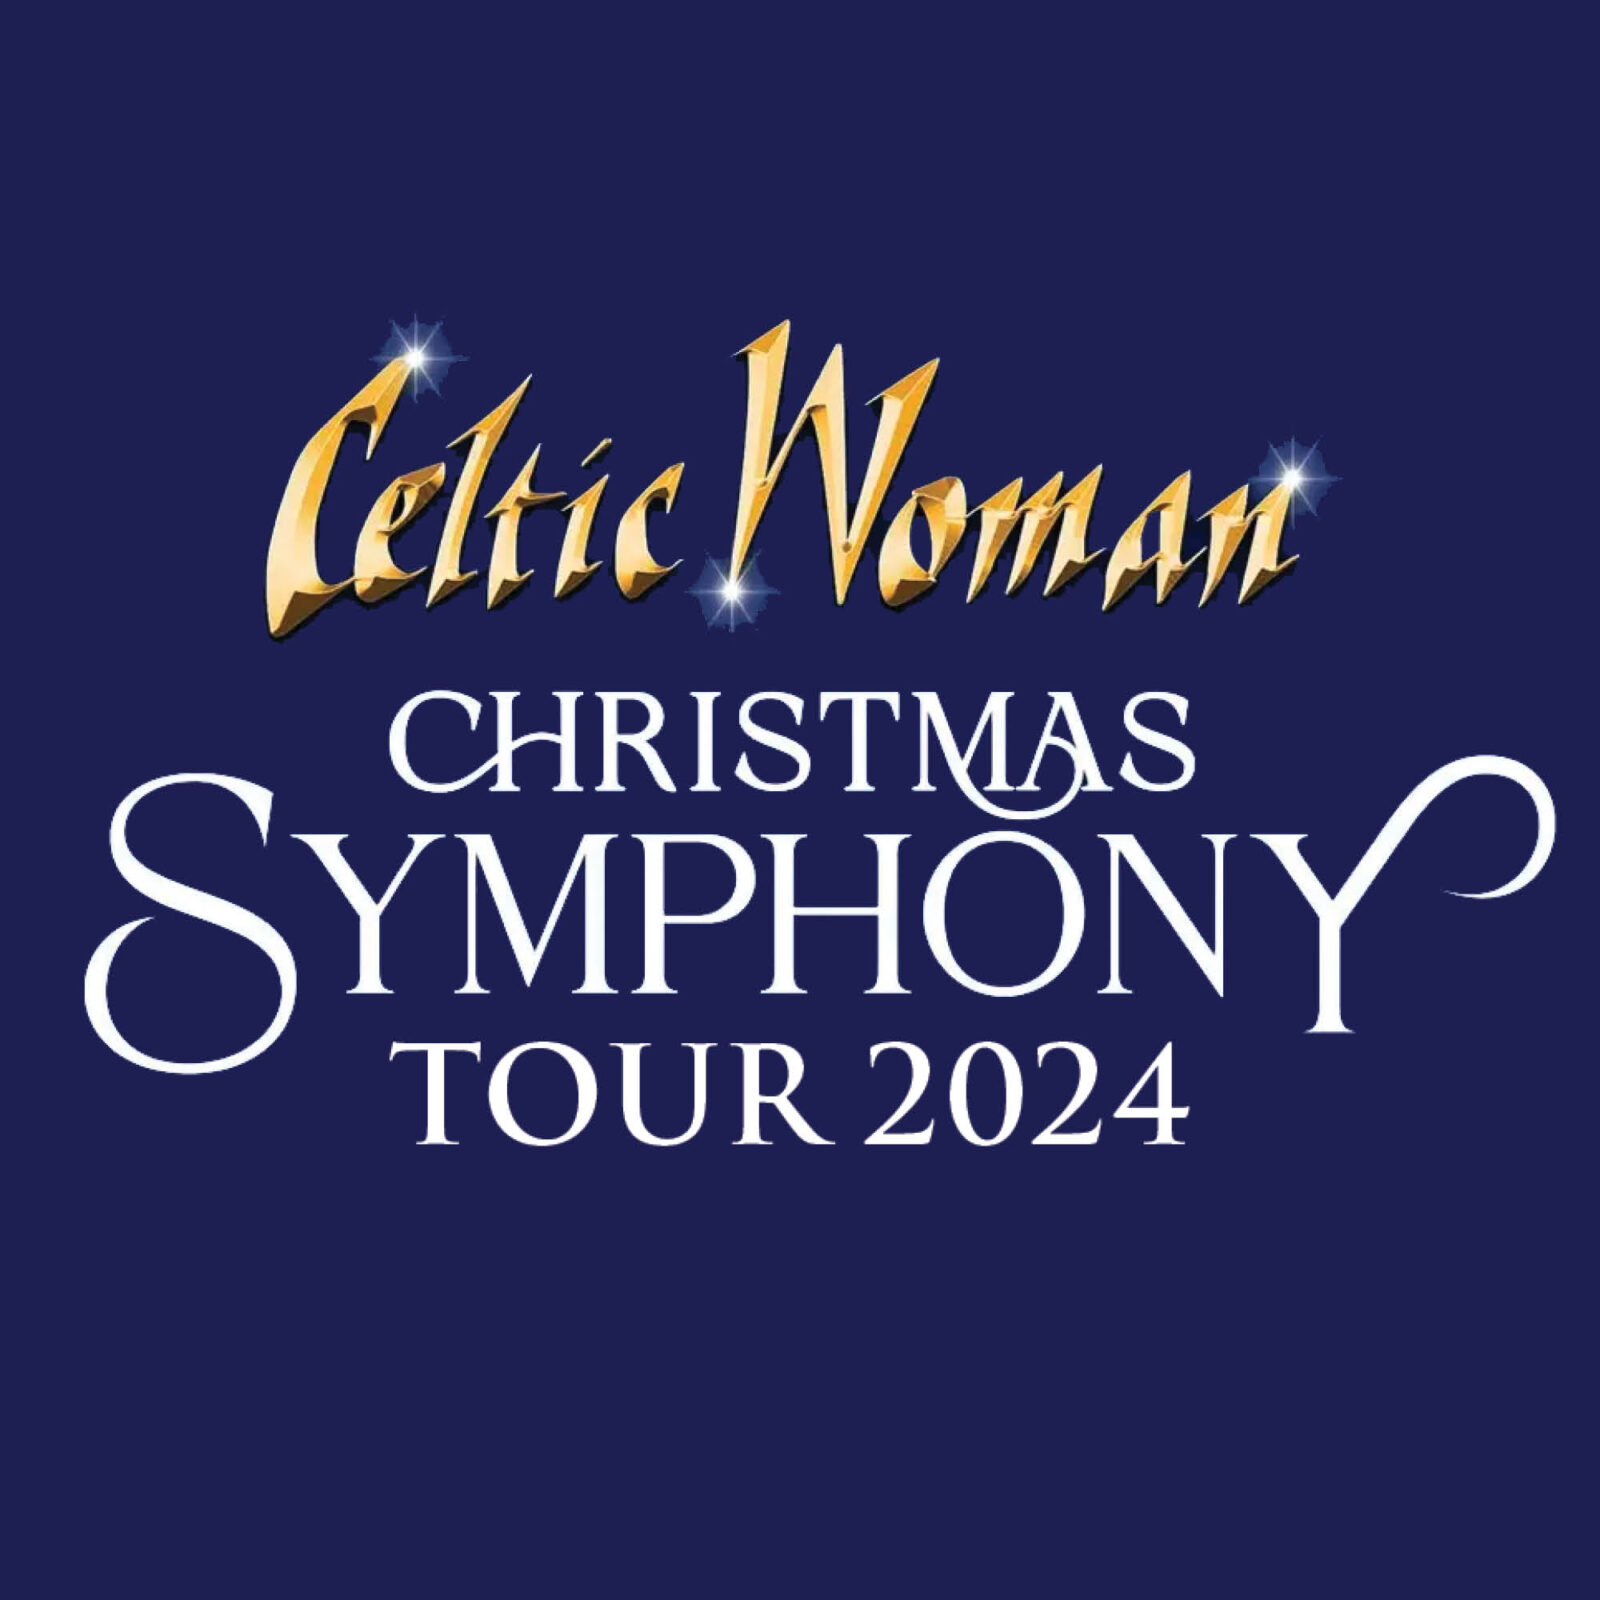 Celtic Woman Christmas Symphony  